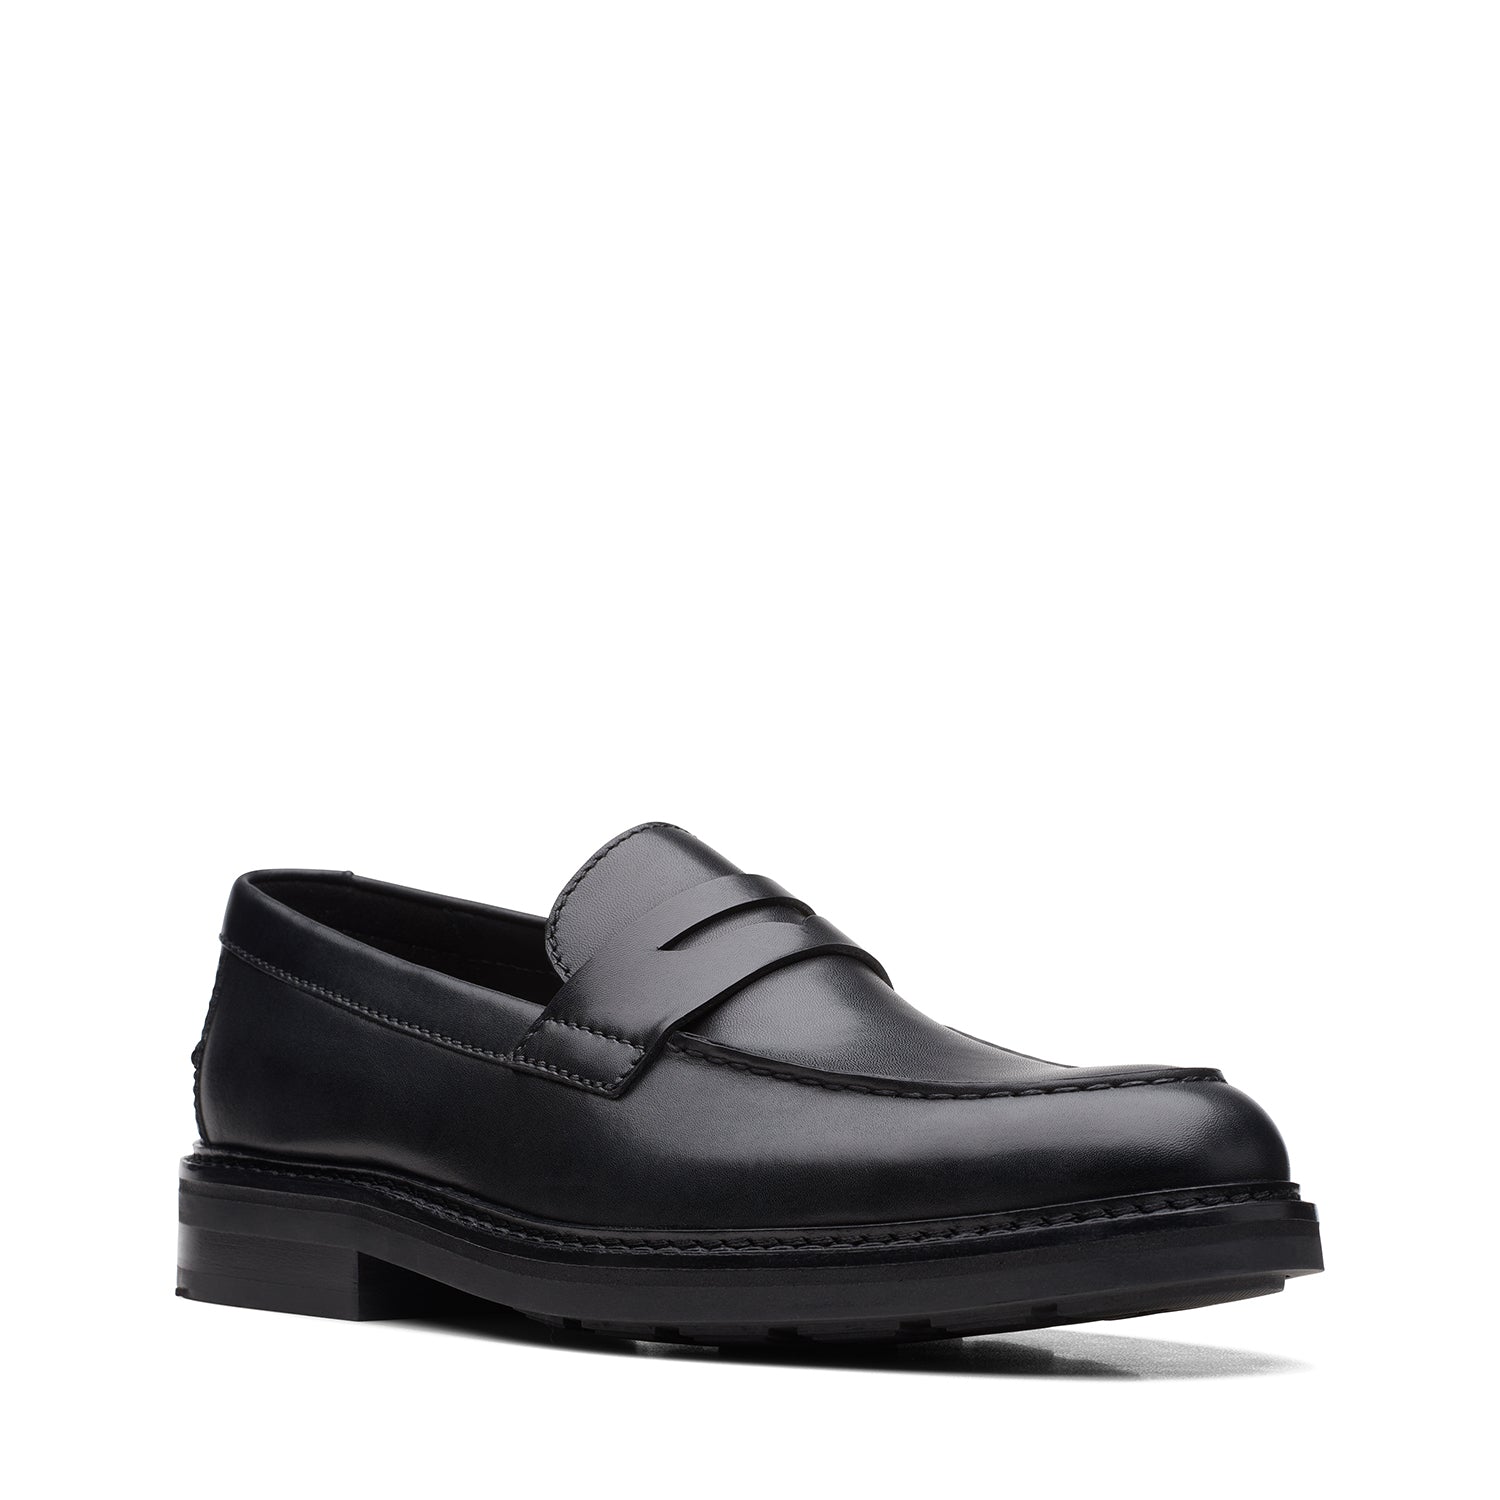 Clarks Craftevan Ease Shoes - Black - 261691397 - G Width (Standard Fit)